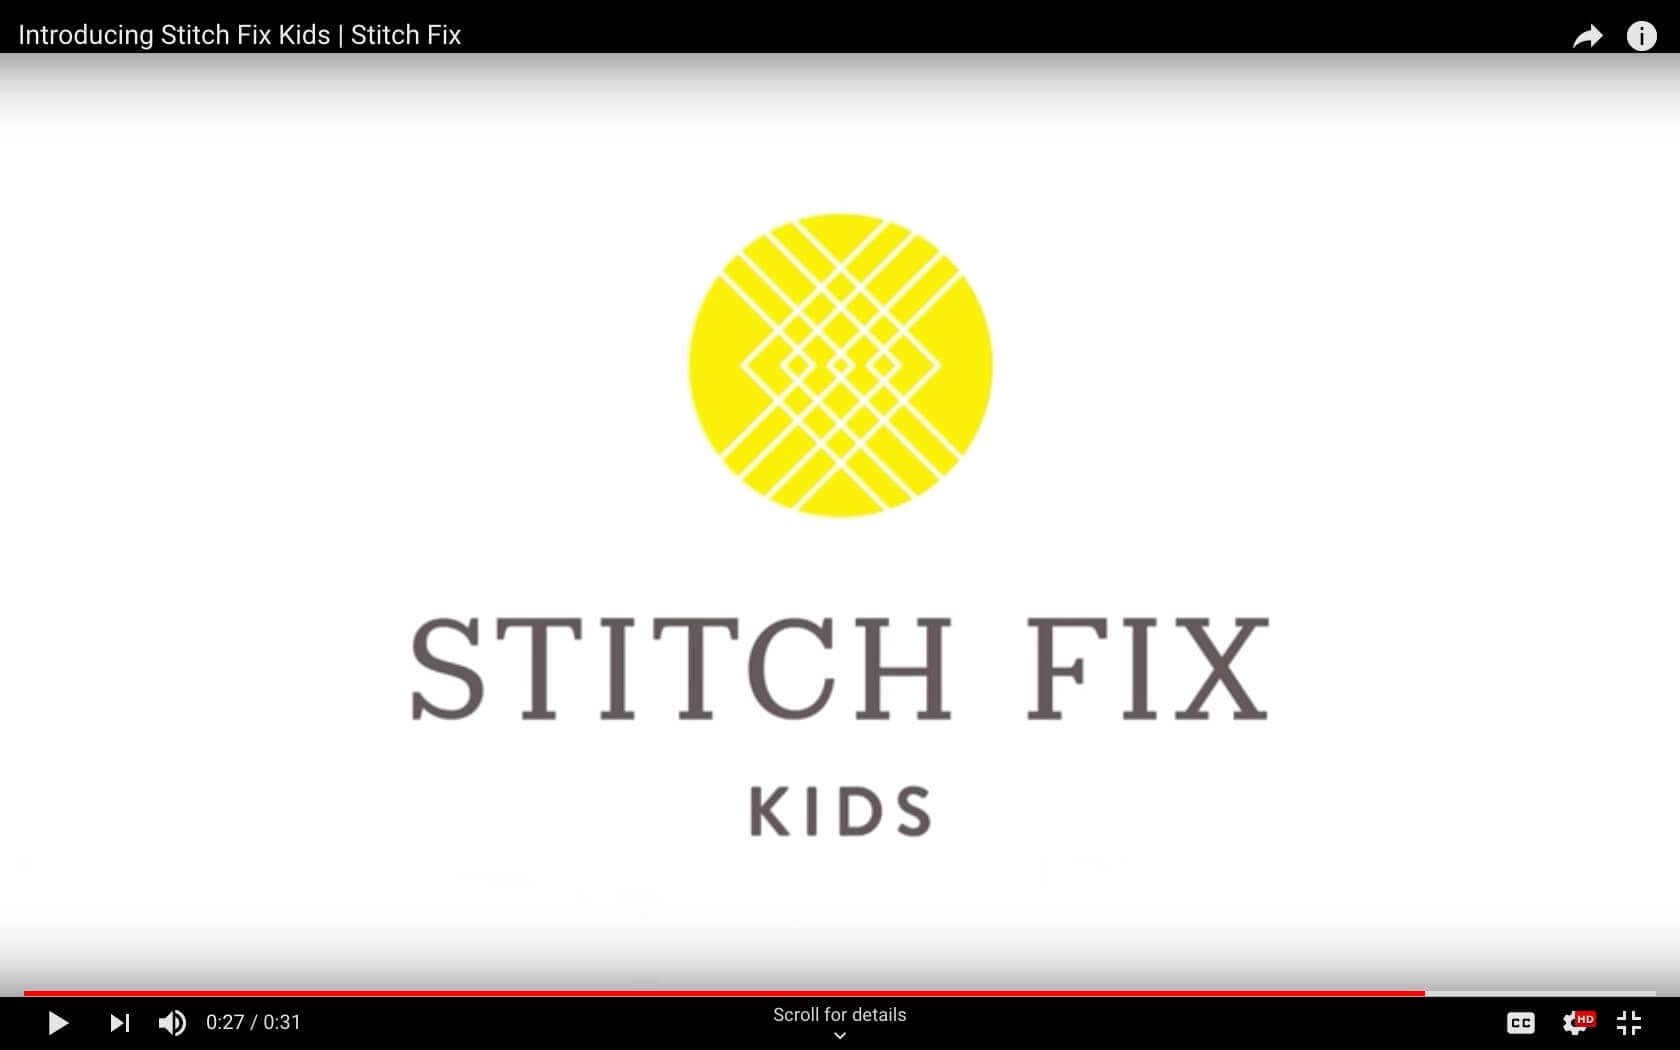 The Stitch Fix Kids explainer video. 